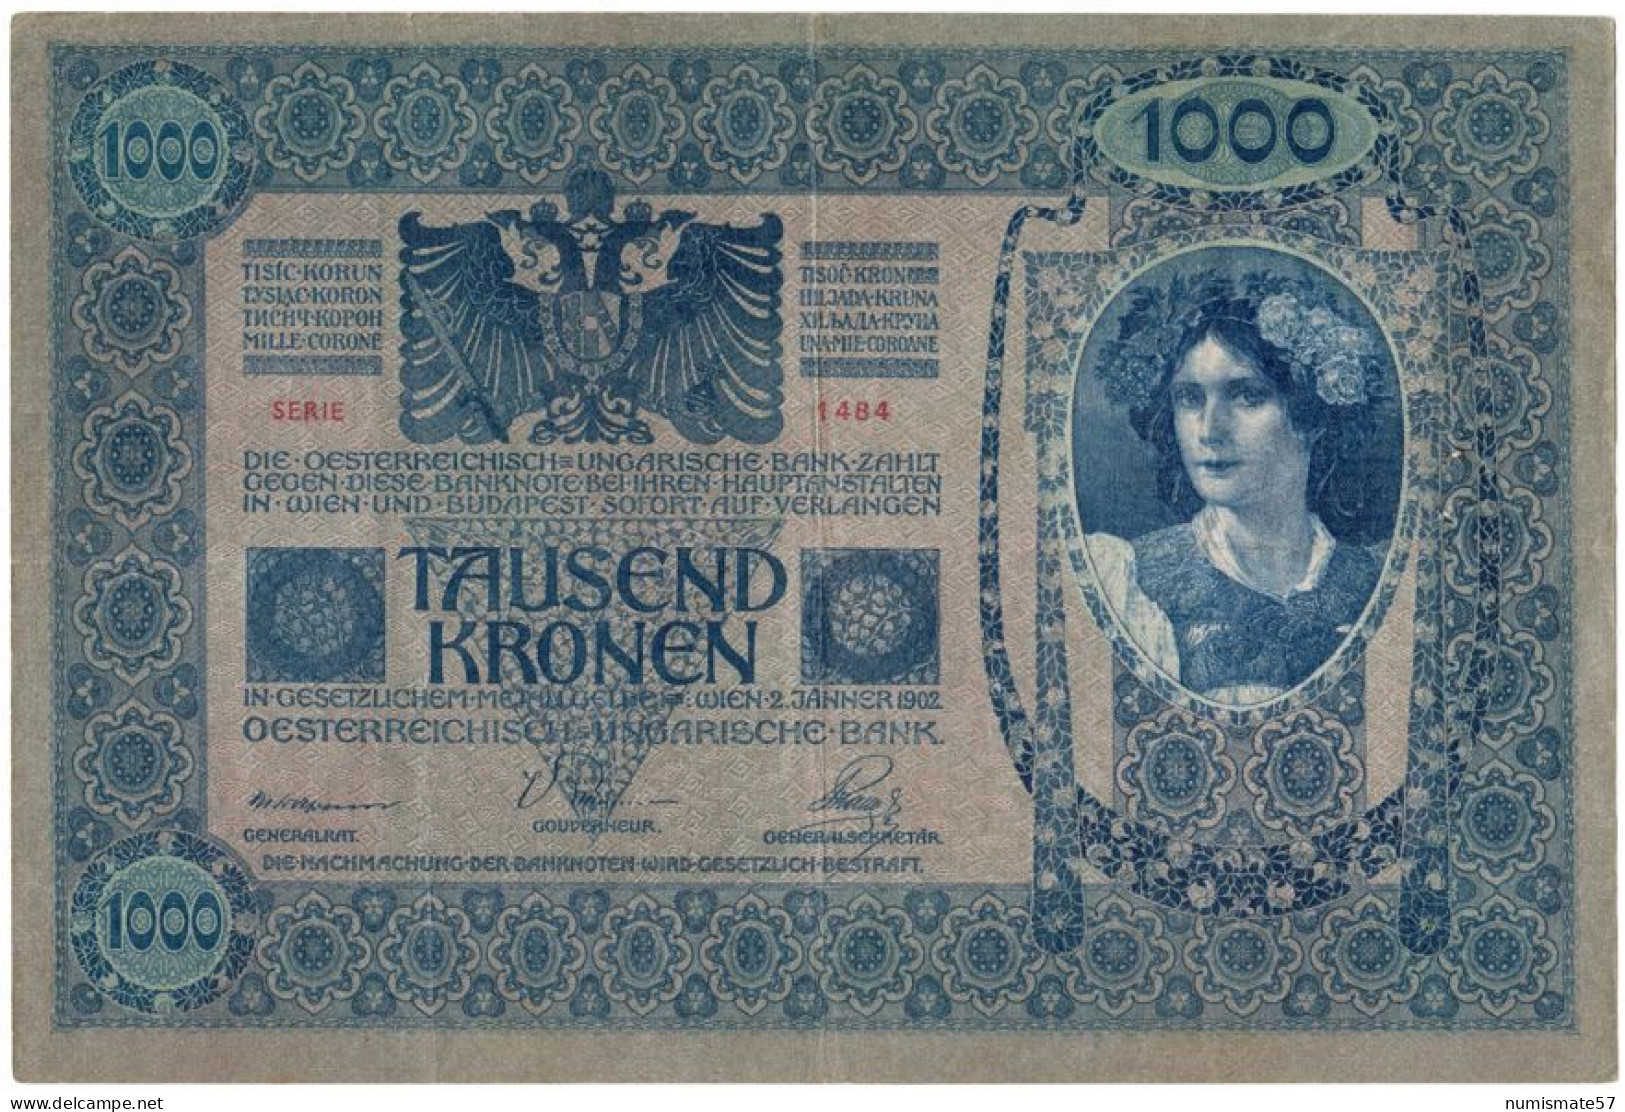 AUTRICHE - AUSTRIA - BILLET 1000 KRONEN 1902 Avec Surcharge Rouge "Deustschosterreich" - ( KK# 141 - P# 59 ) - Austria